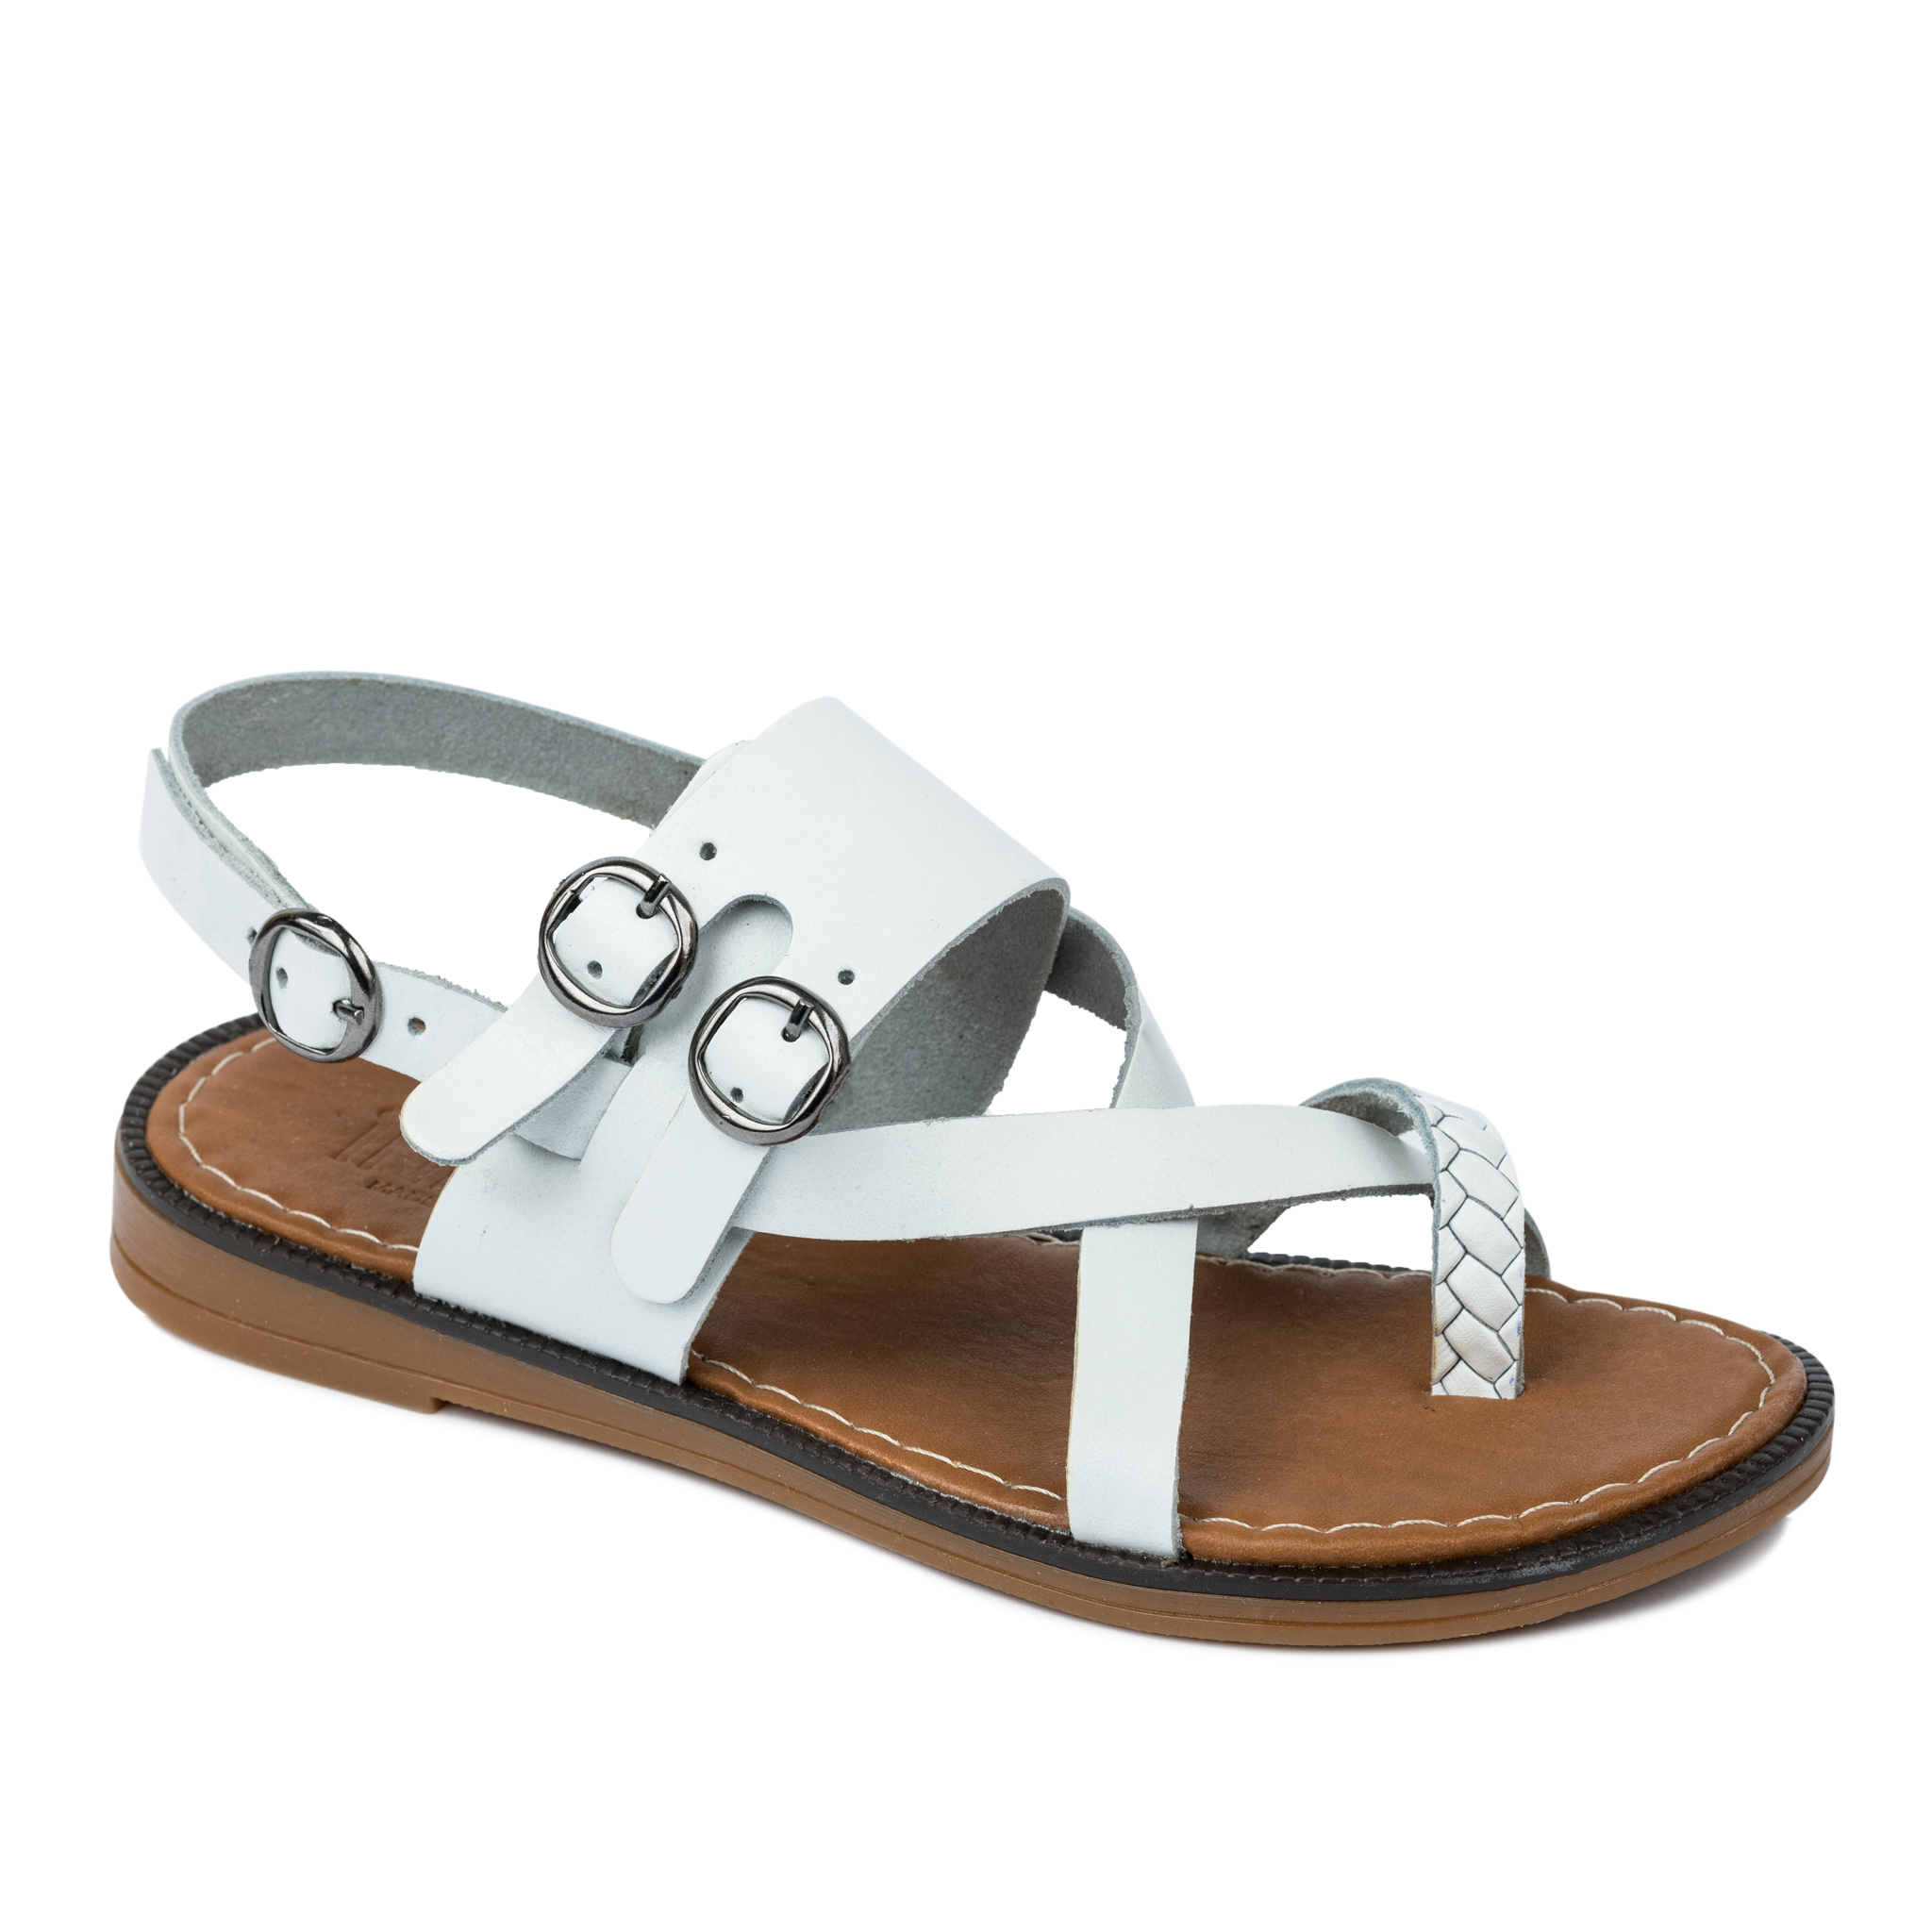 Women sandals A346 - WHITE